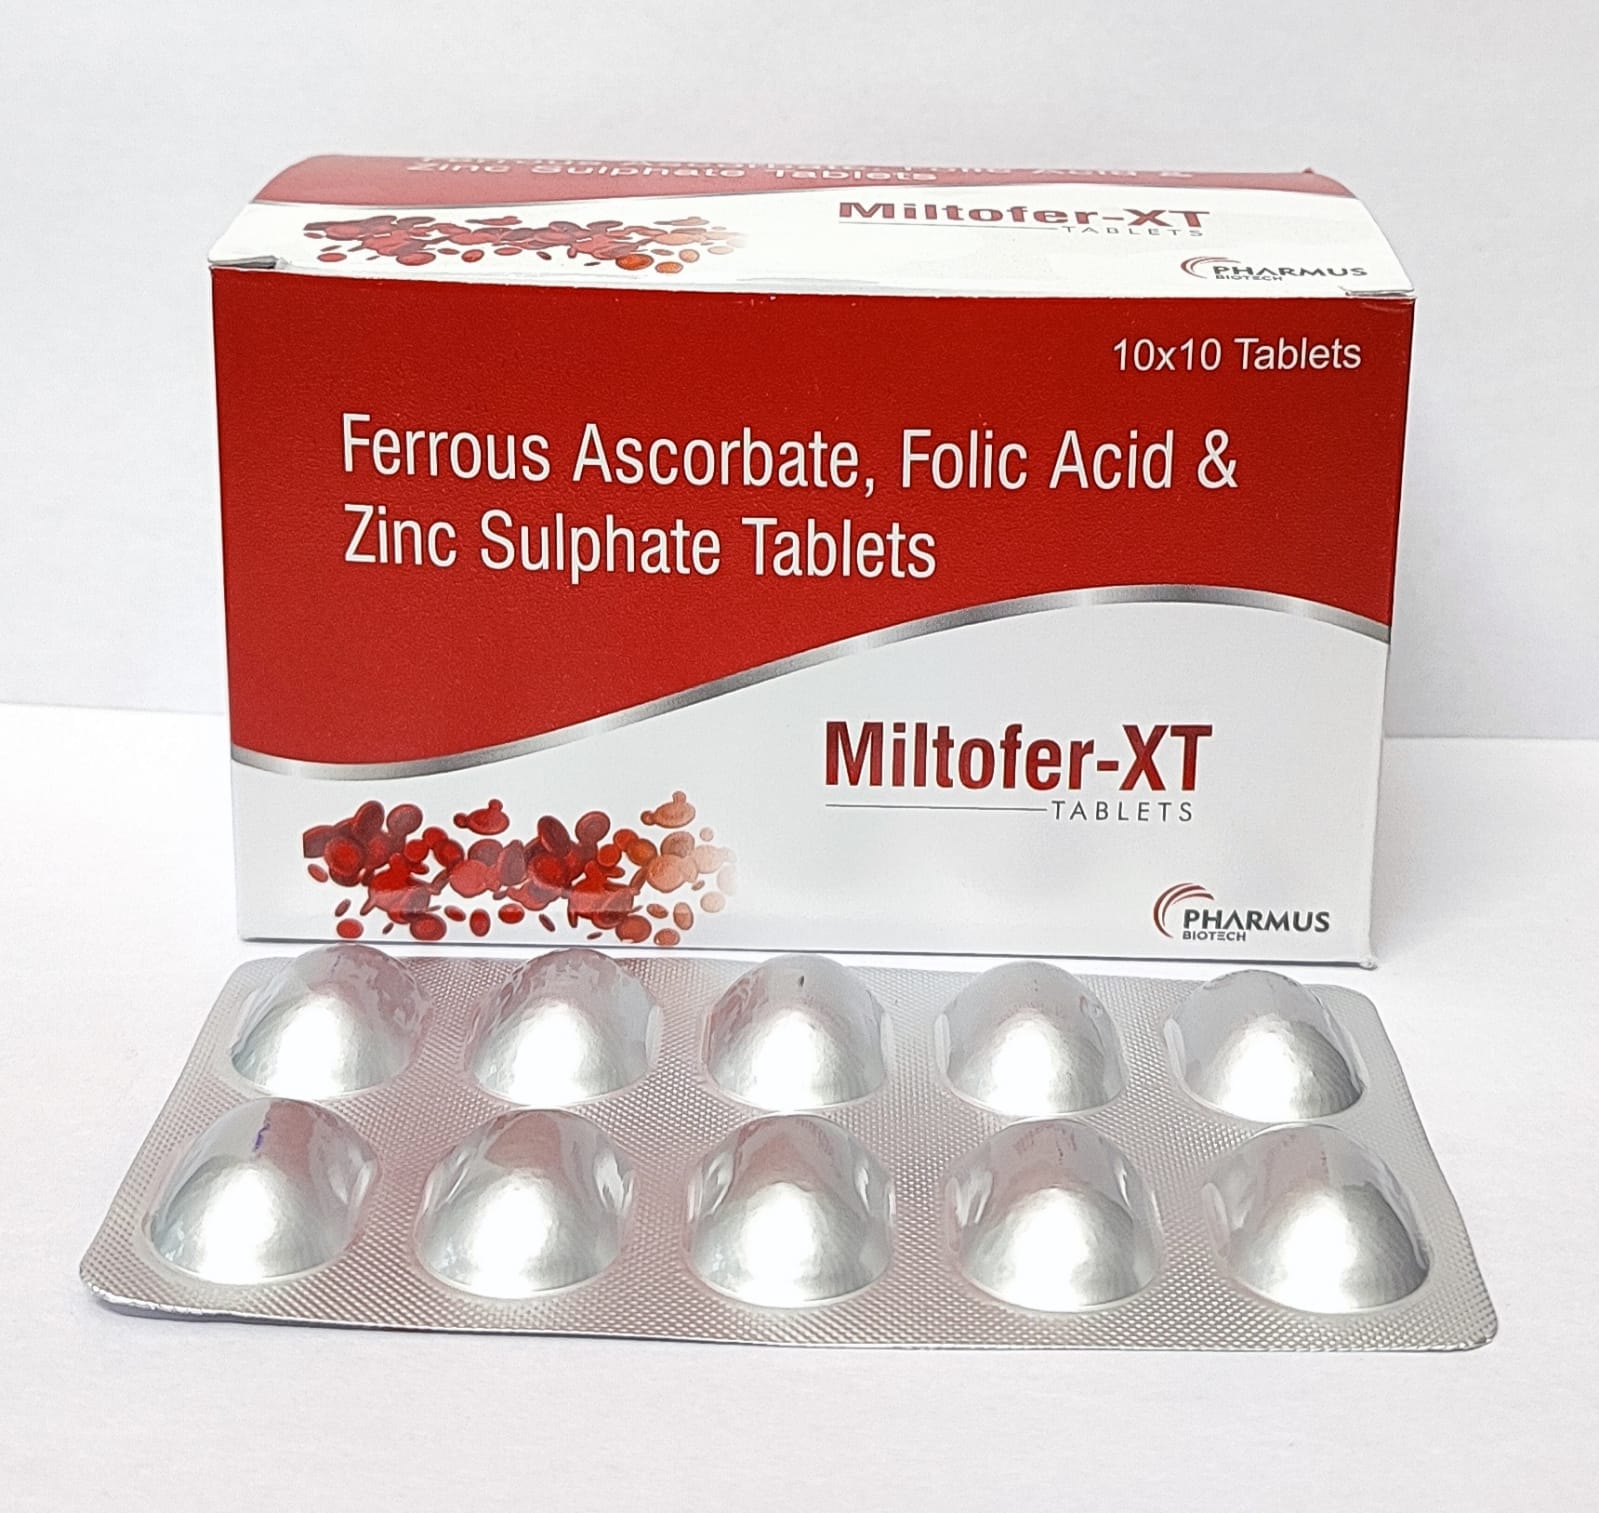 Miltofer-XT Tablets